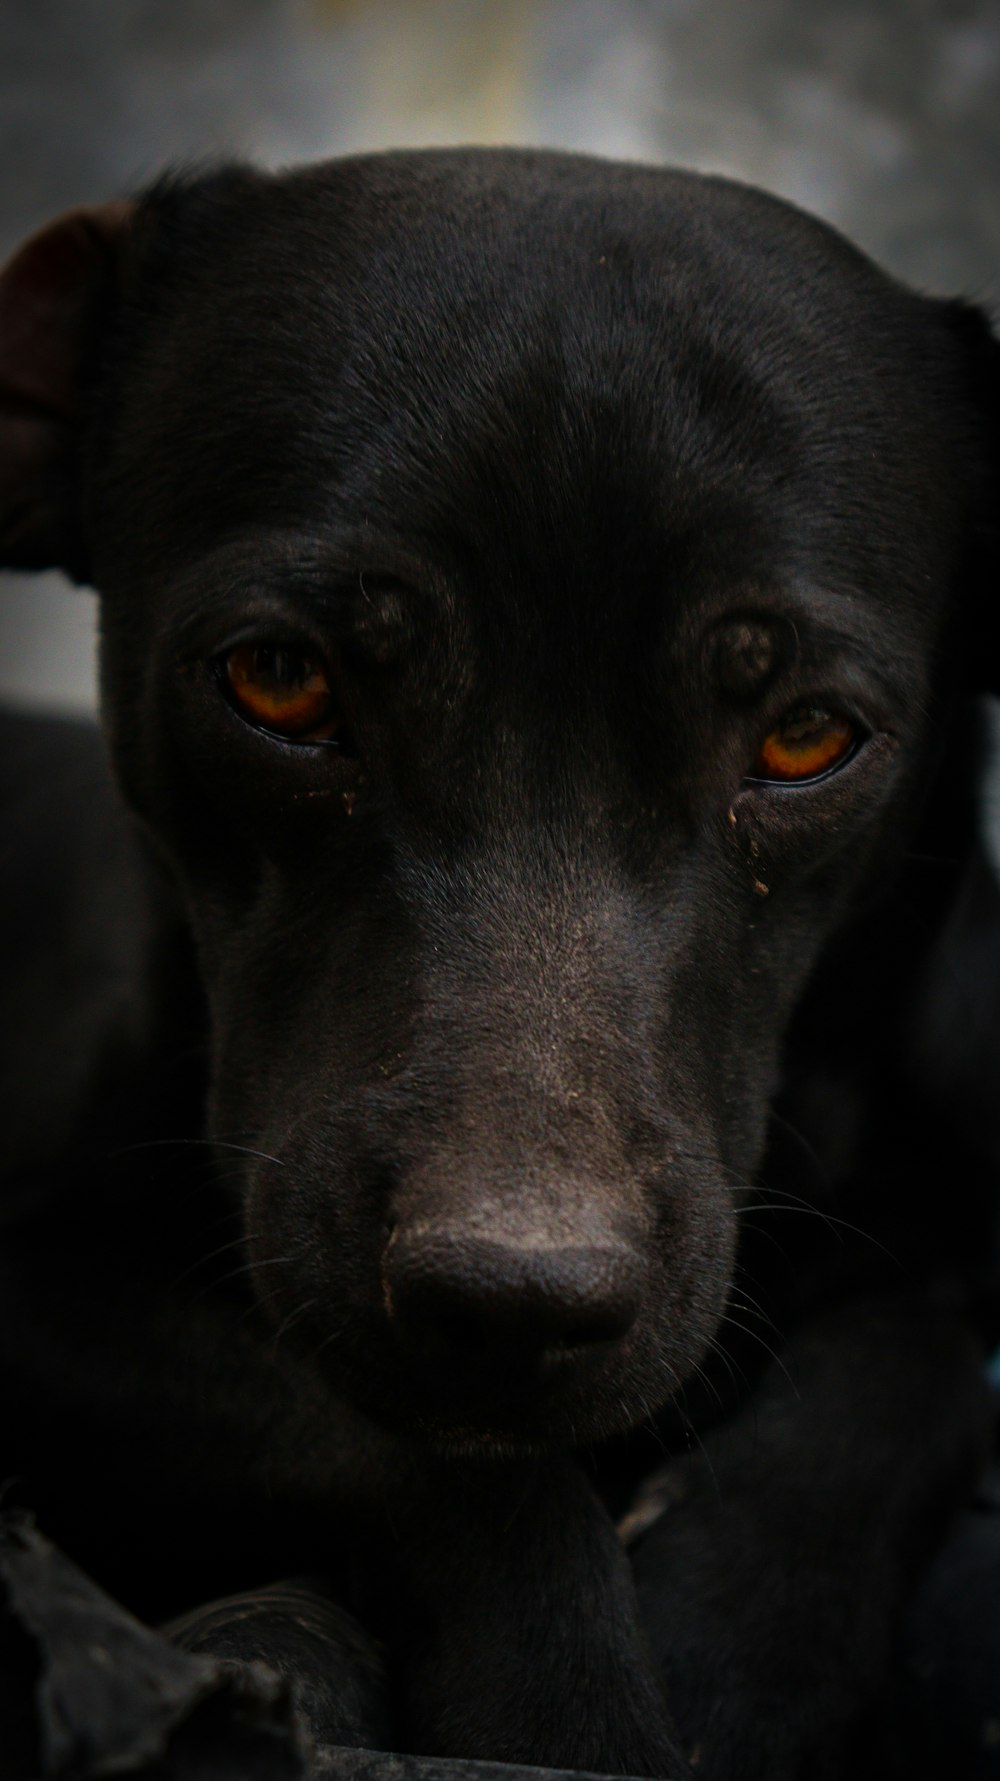 a close up of a black dog with orange eyes